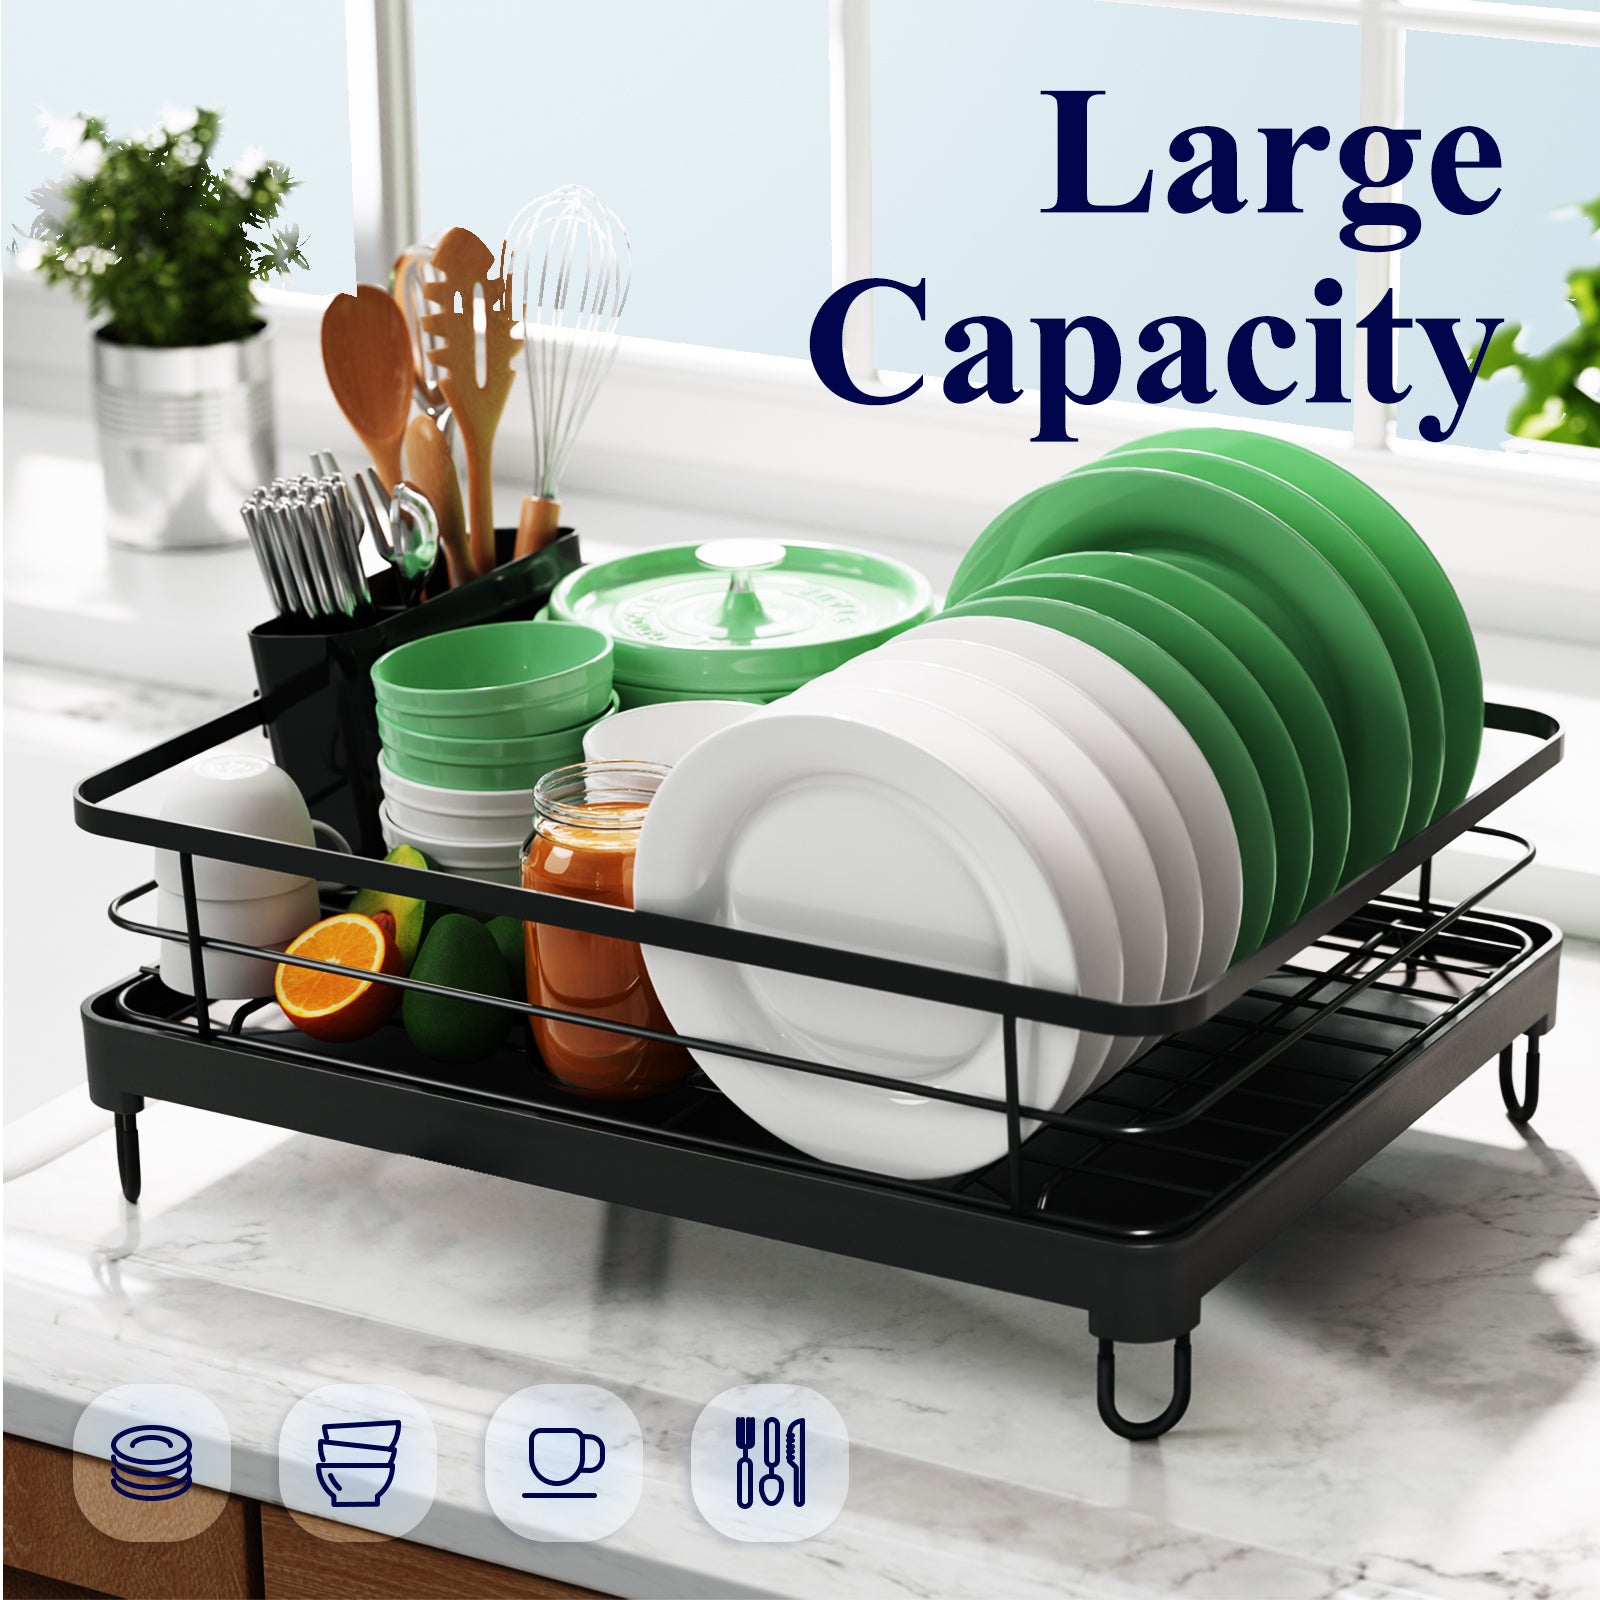 Kitsure Large Dish Drying Rack - Extendable Dish Rack, Multifunctional Dish  Rack for Kitchen Counter, Anti-Rust